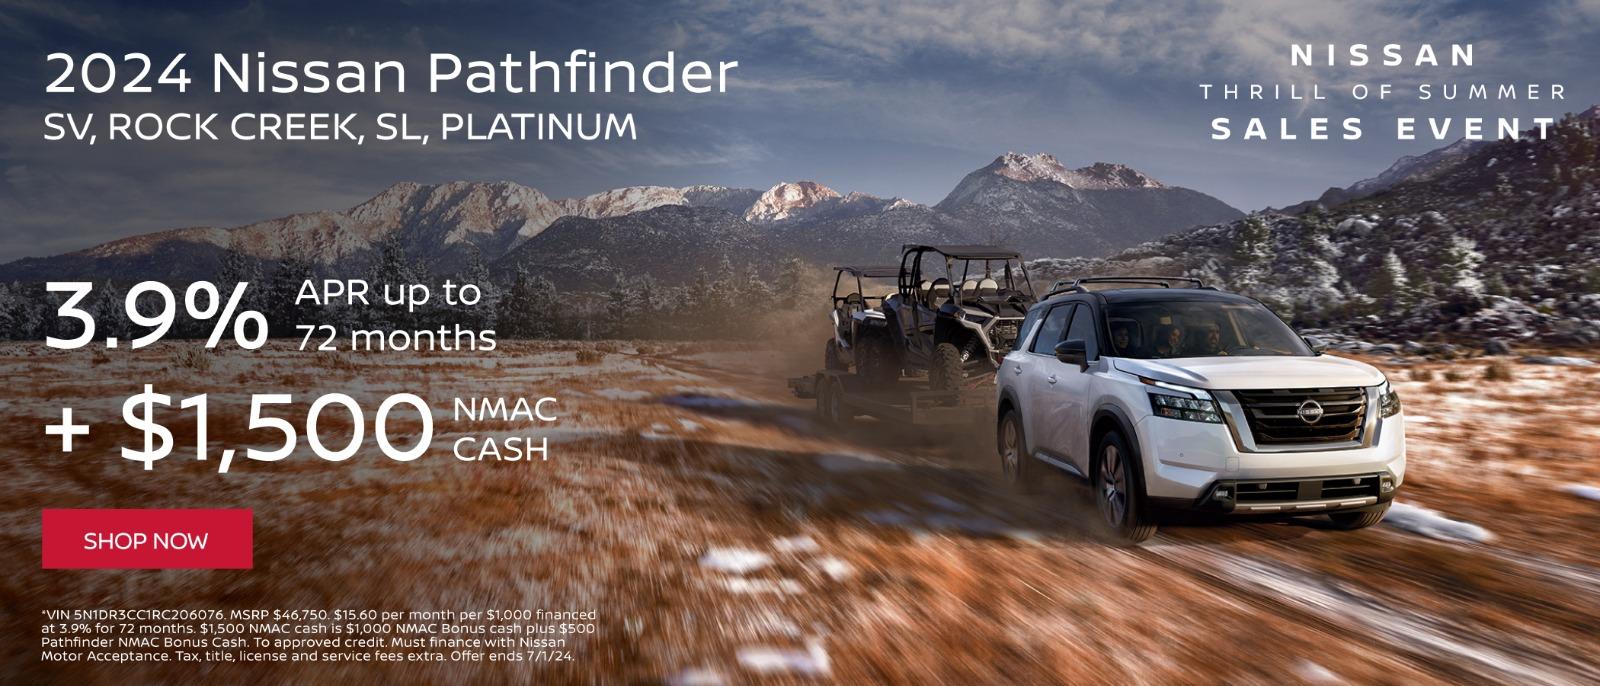 2024 Nissan Pathfinder 3.9 % APR up to 72 months